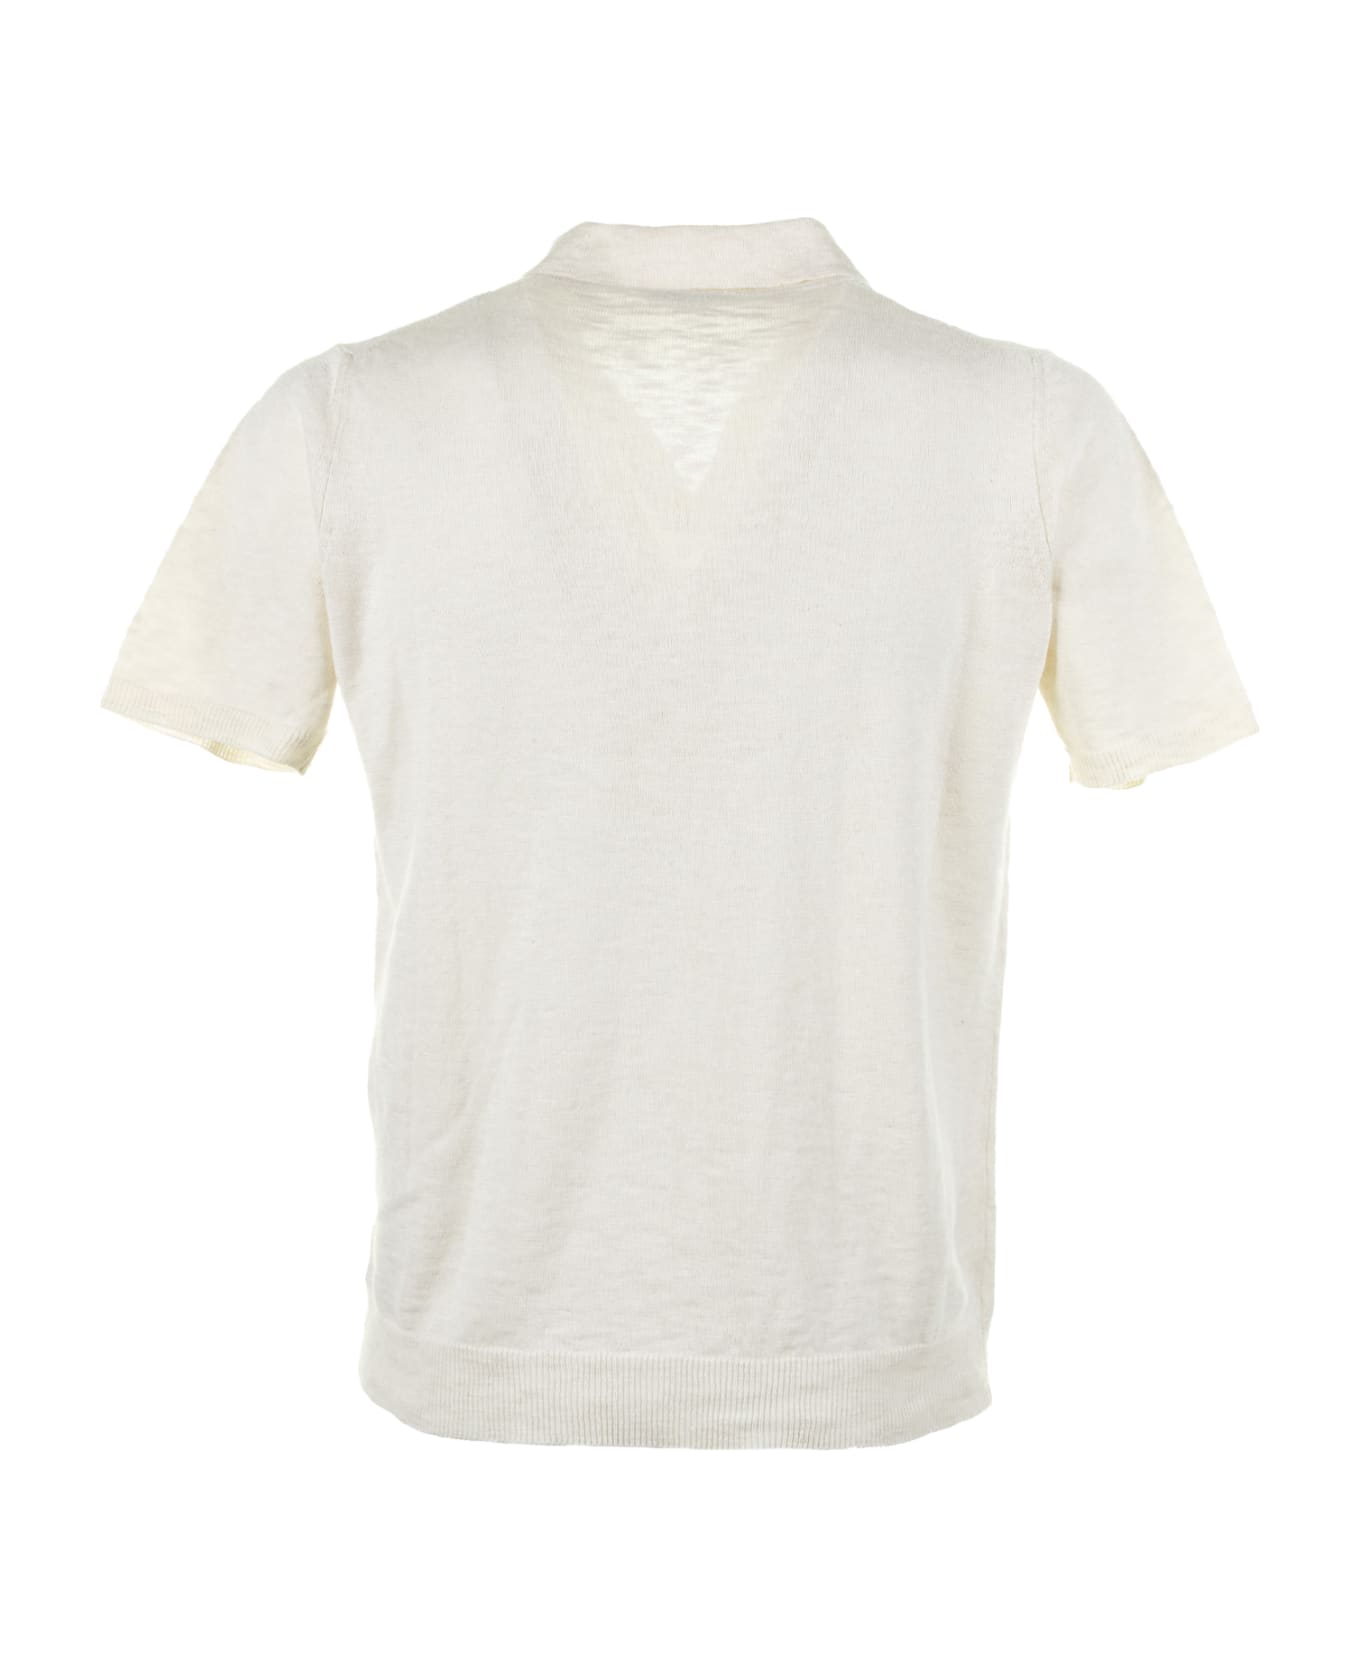 Seventy White Short-sleeved Polo Shirt - BIANCO ポロシャツ